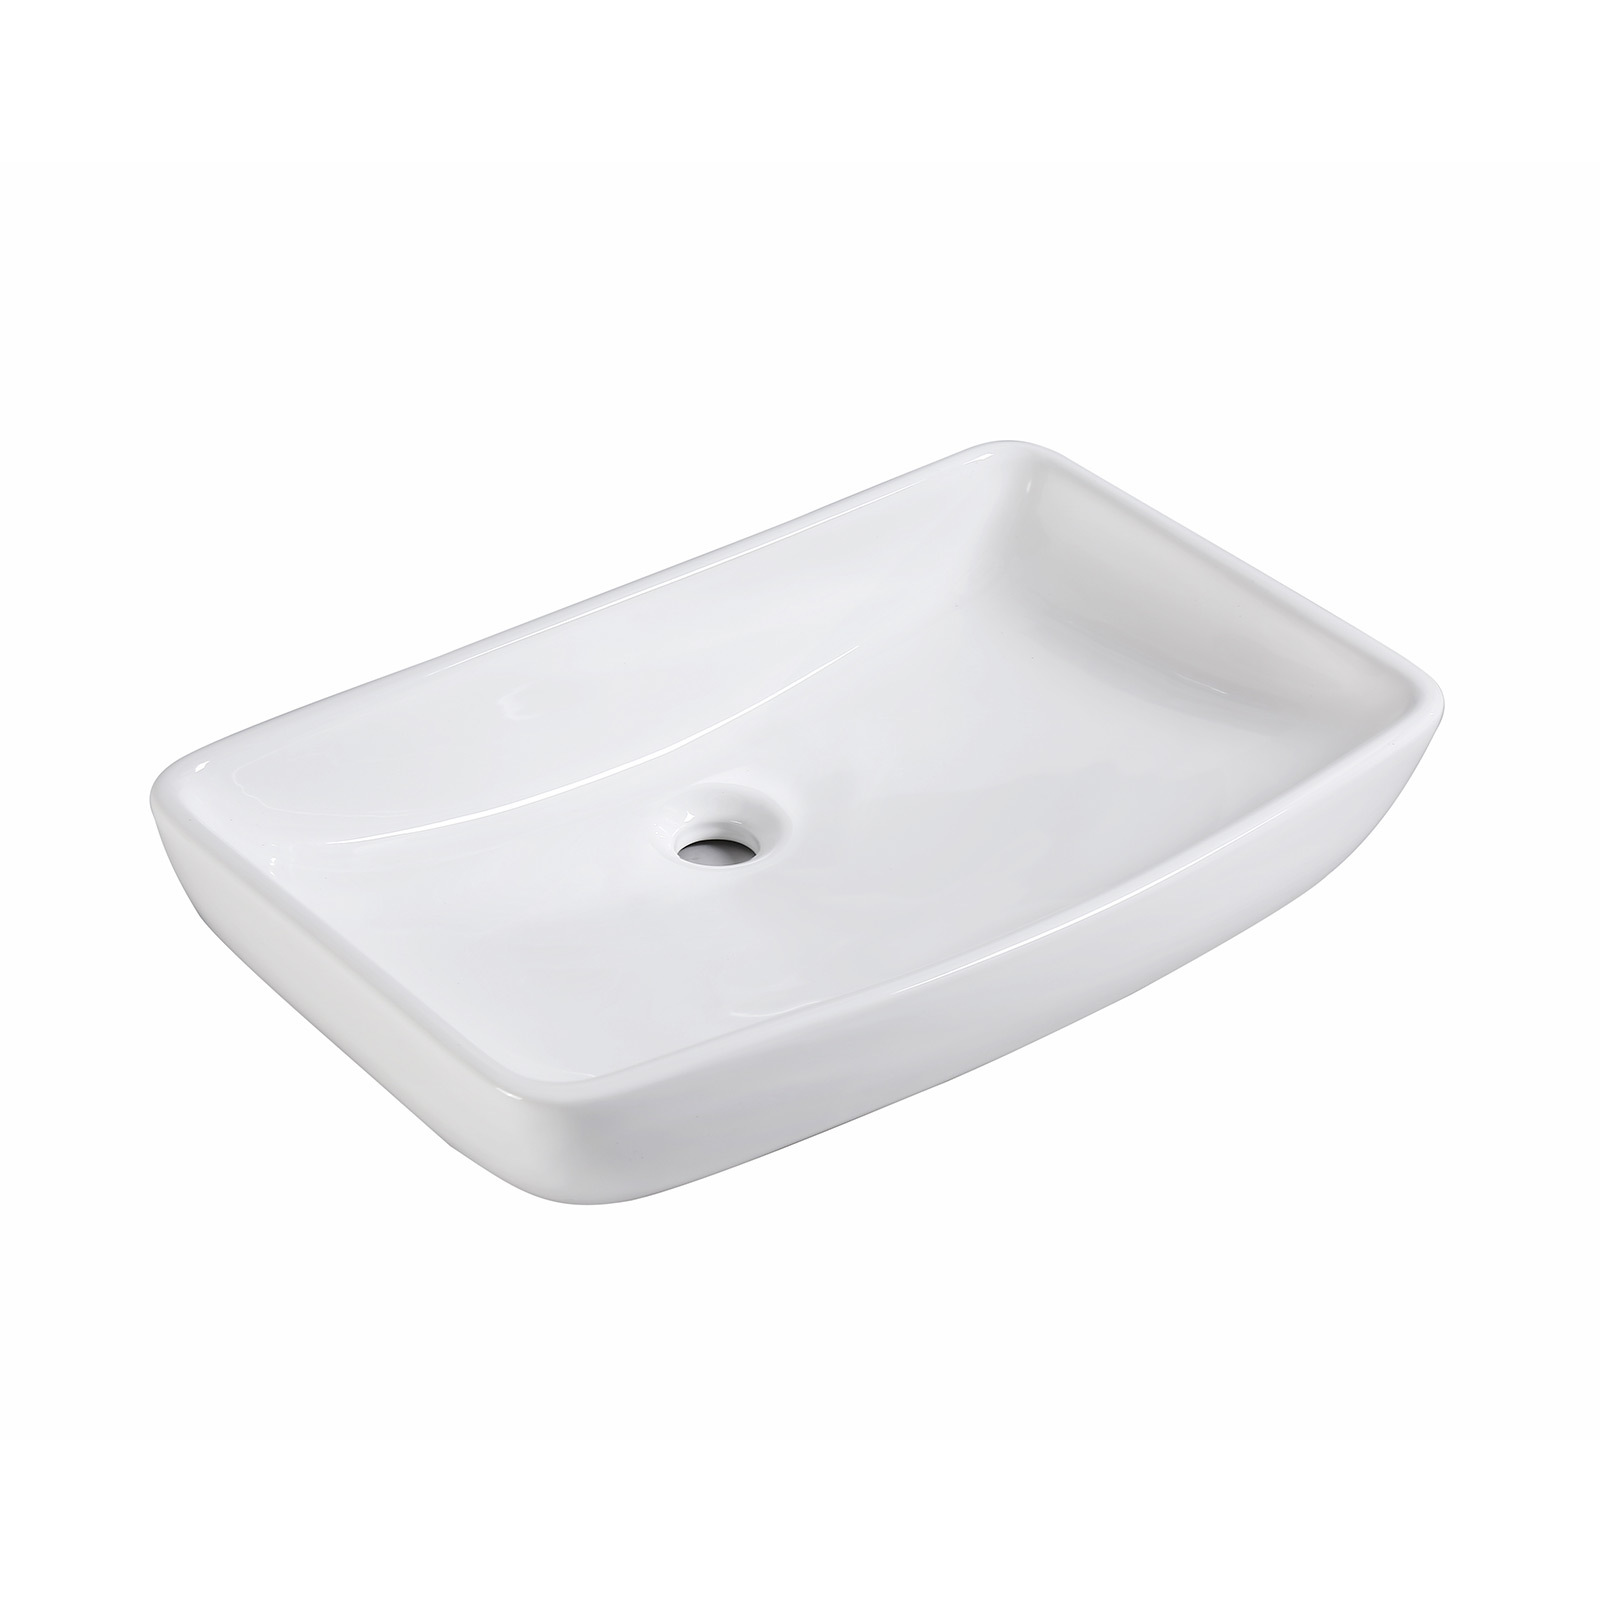 60 x 38 x 12cm Ceramic Bathroom Basin Rectangular - WHITE